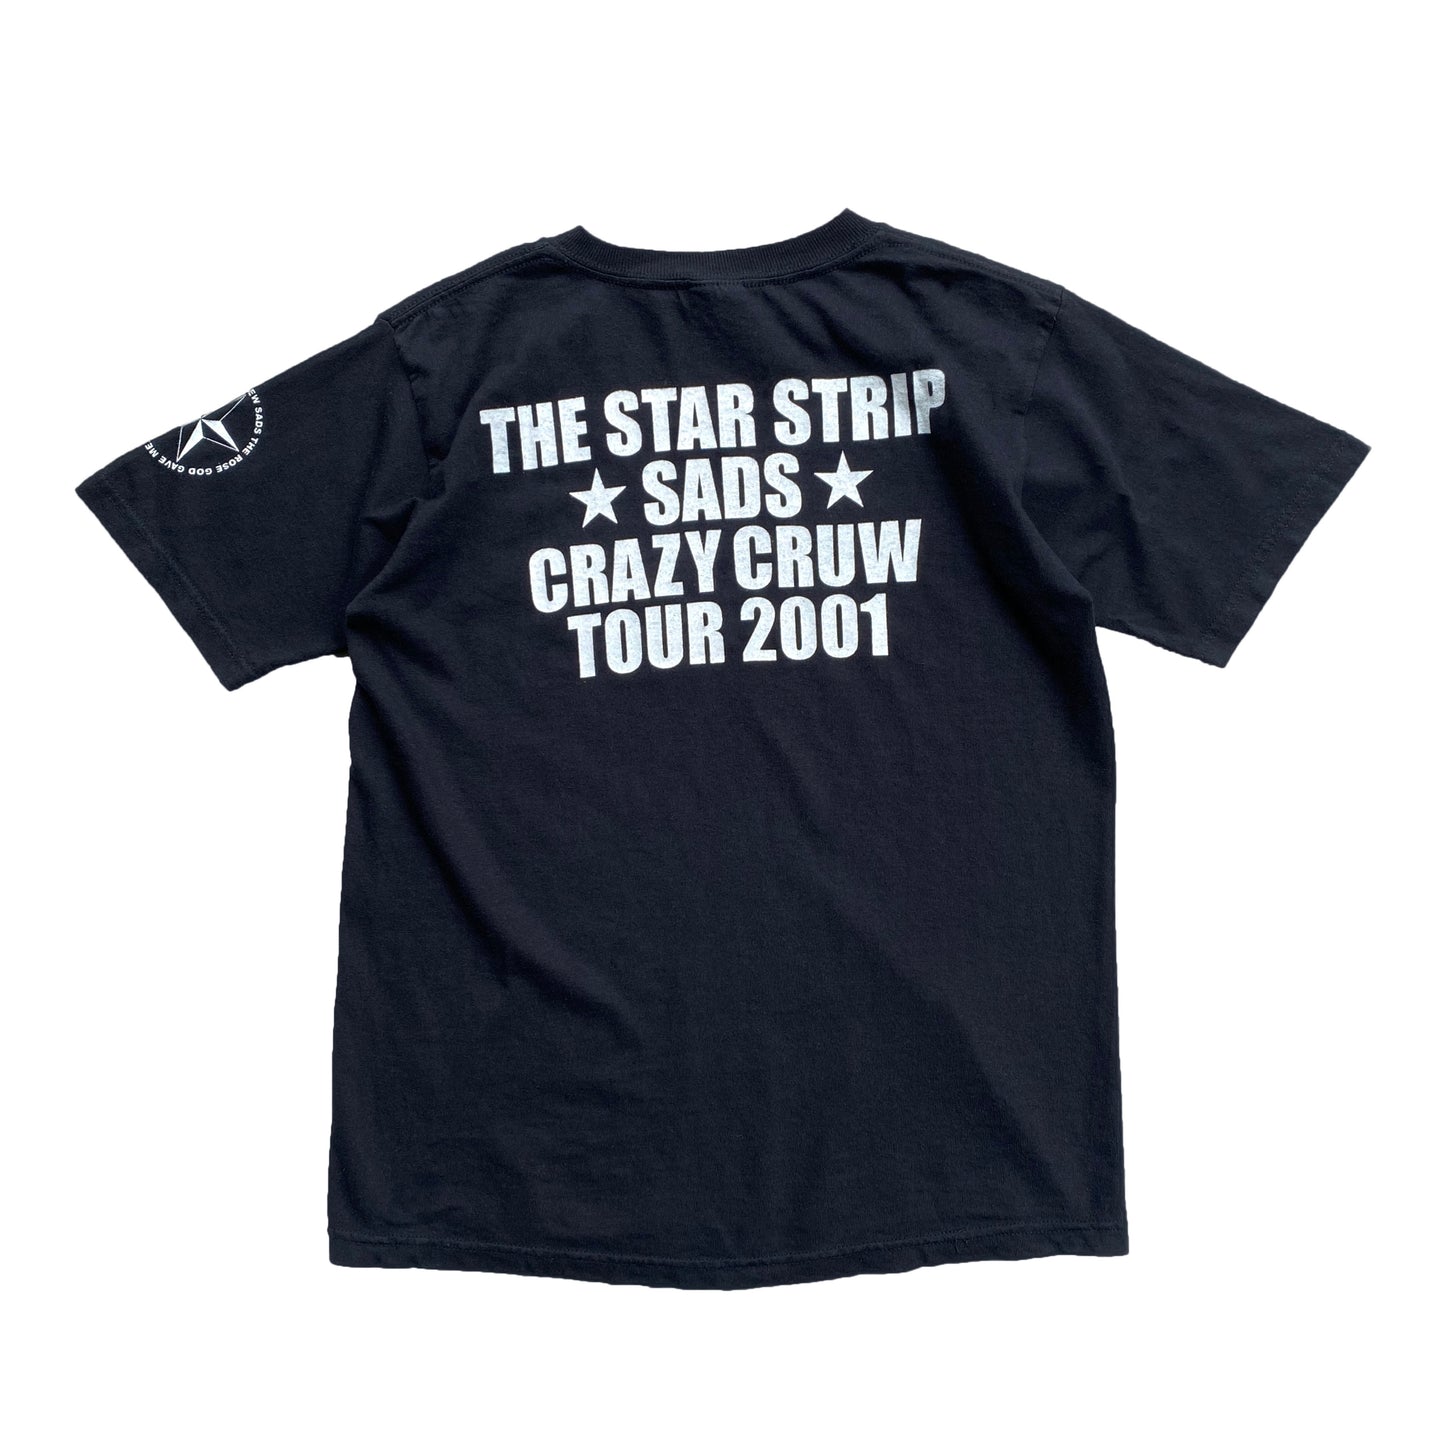 00's SADS "THE STAR TRIP" T-SHIRT